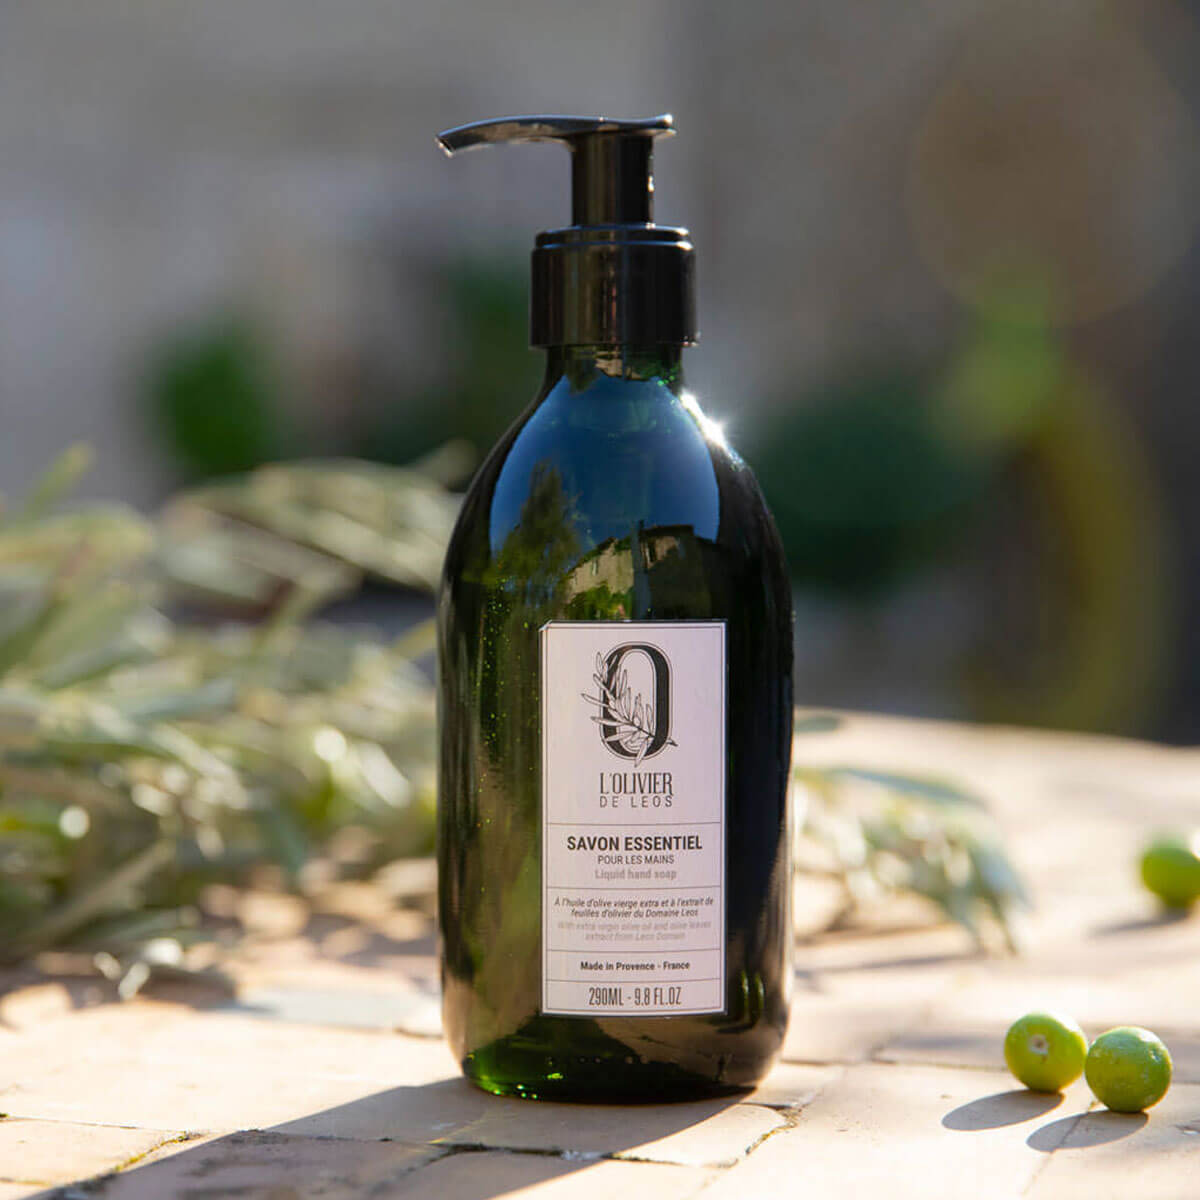 Savon Le Naturel Soap Olive 500 ml